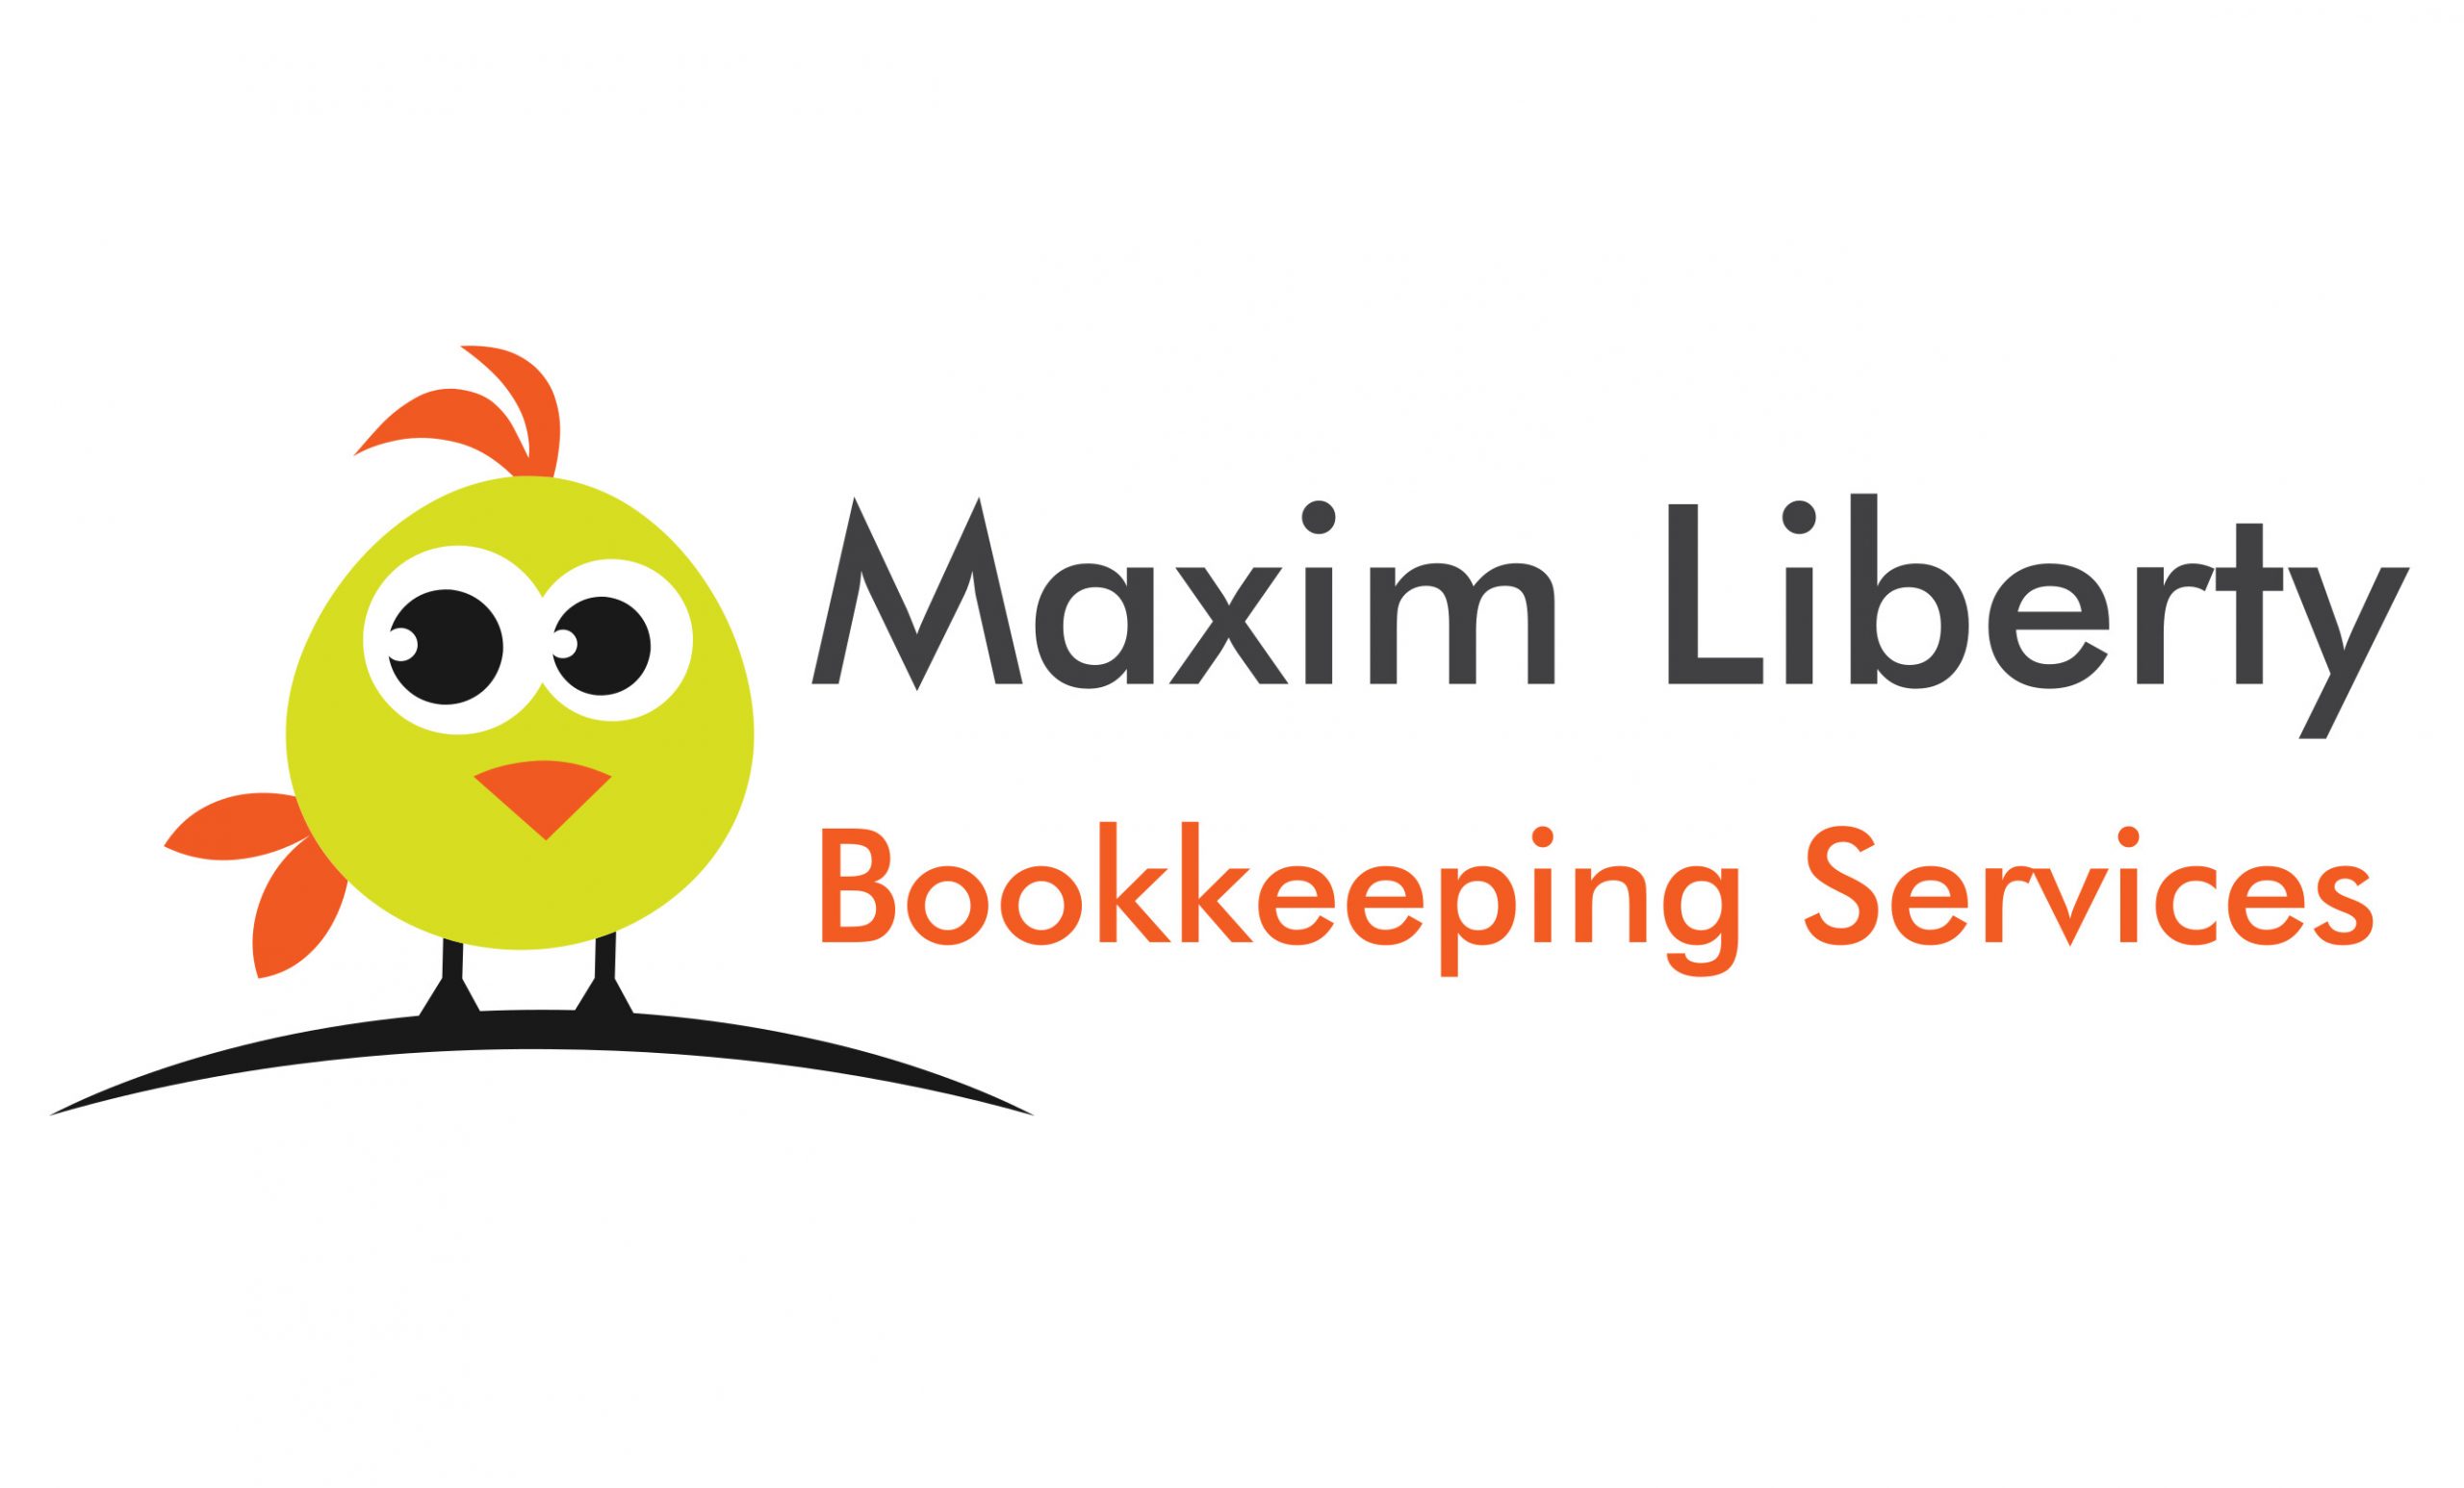 Maxim Liberty Bookkeeping Services LLC